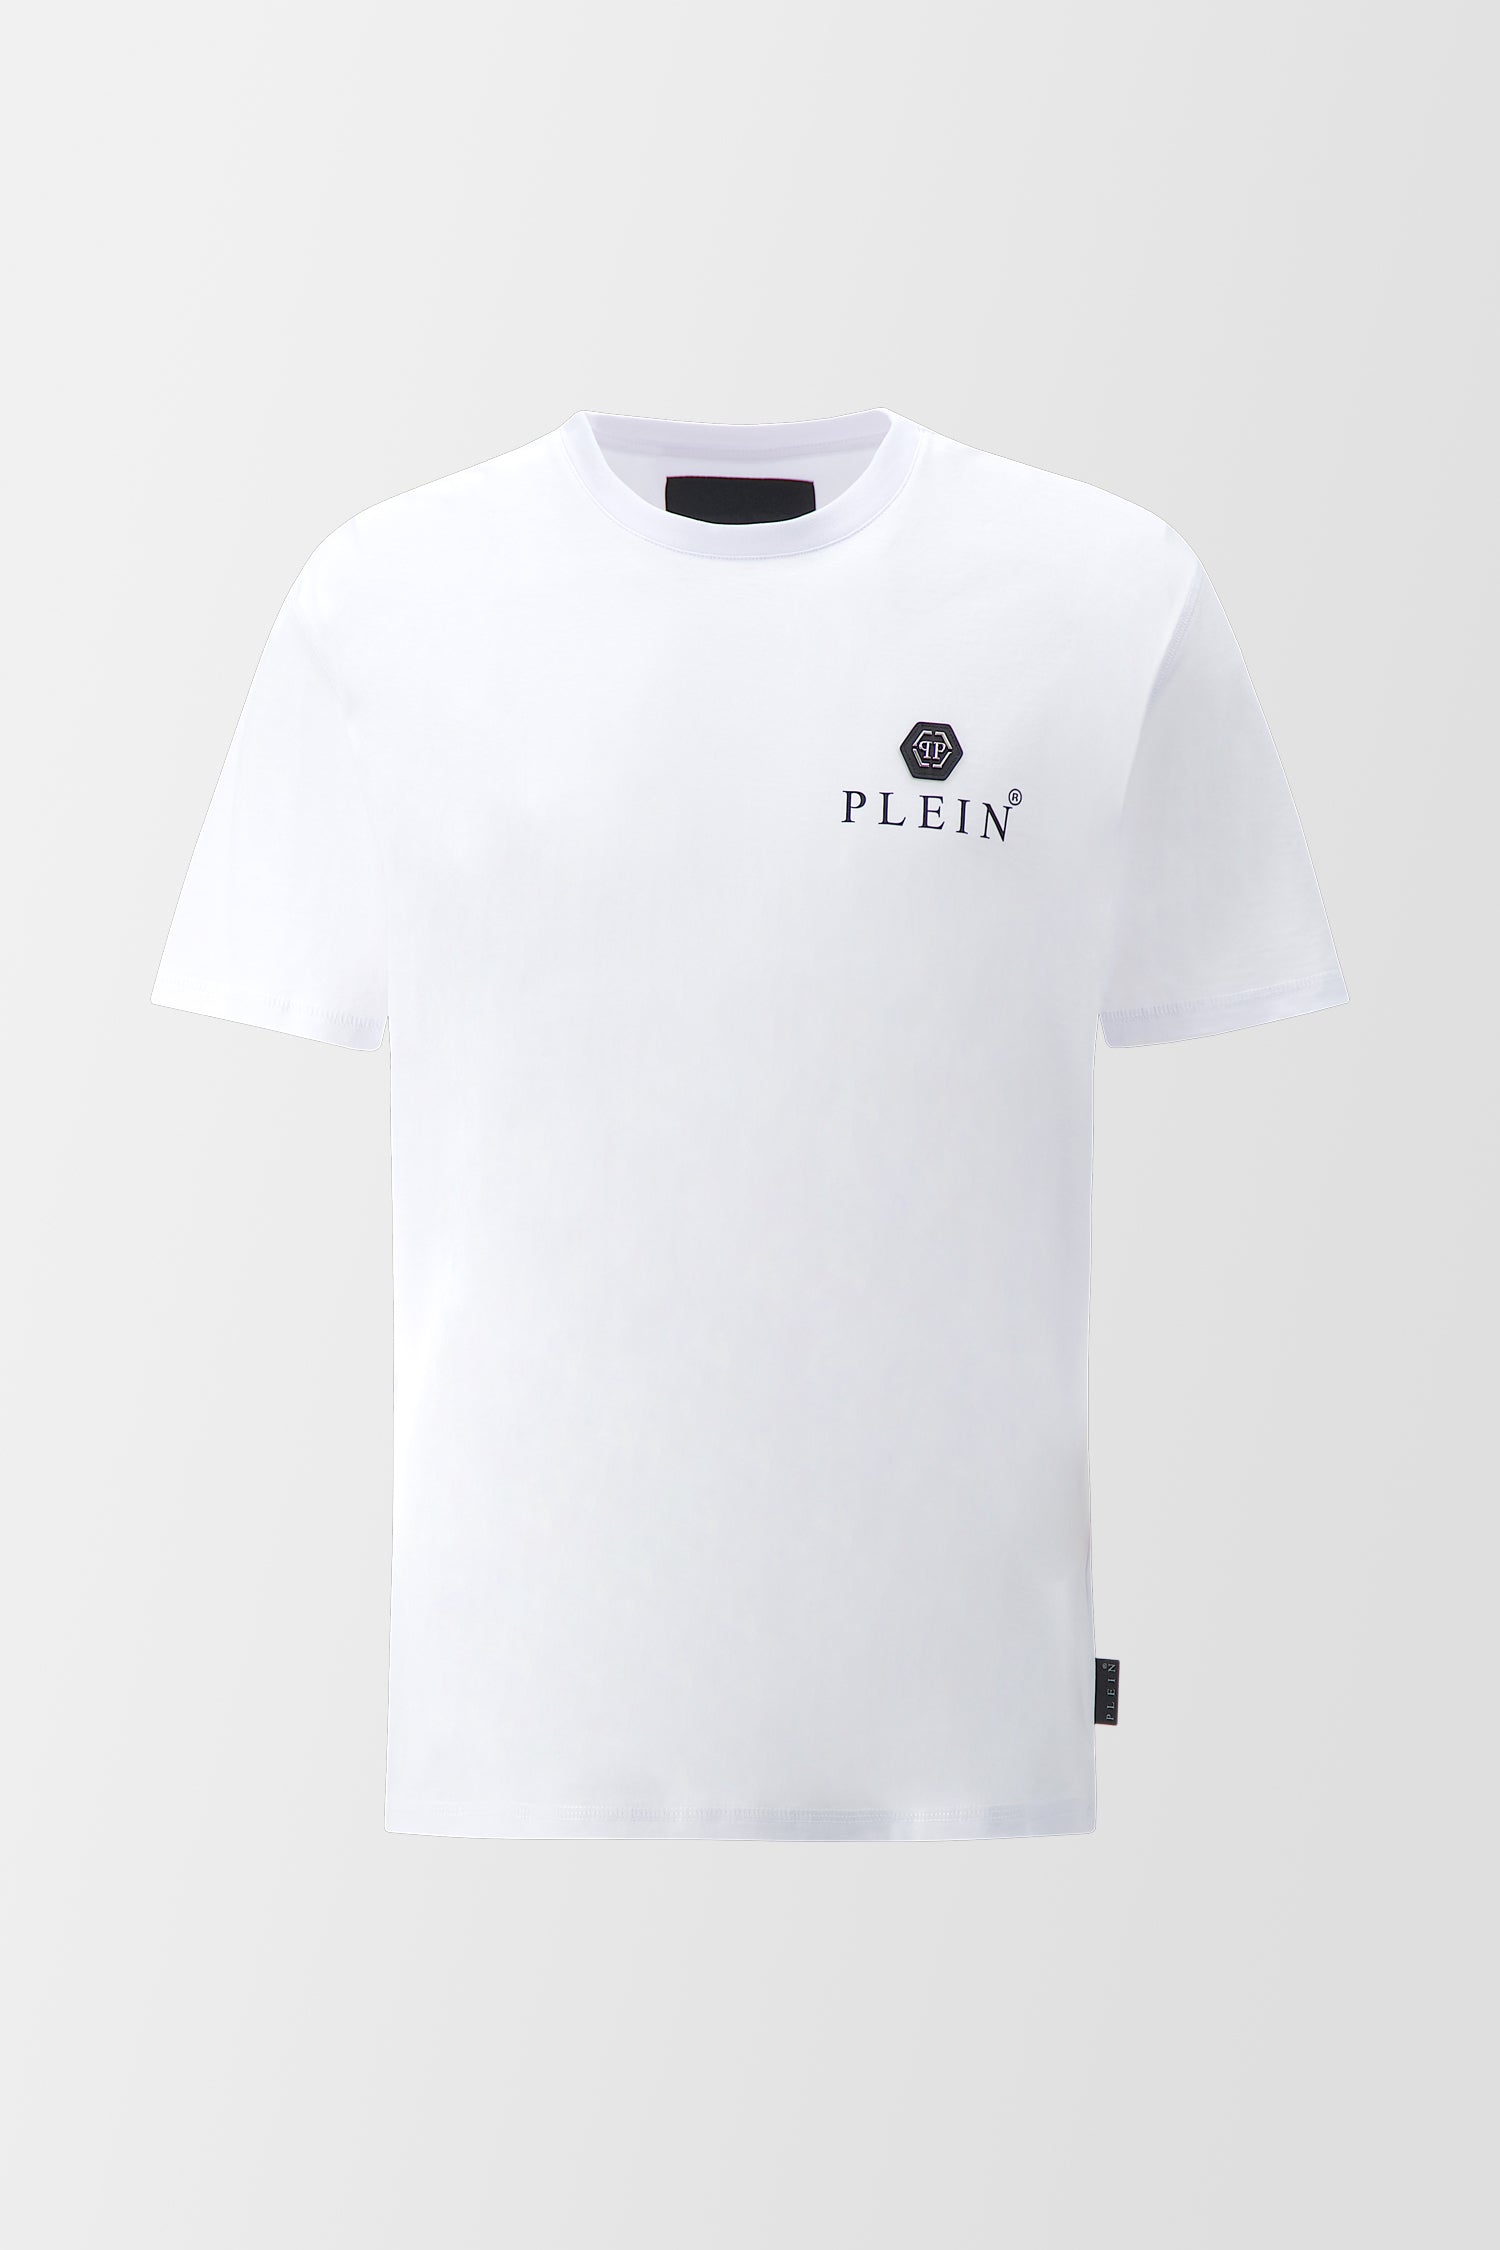 Philipp Plein White Round Neck SS Iconic Plein T-Shirt